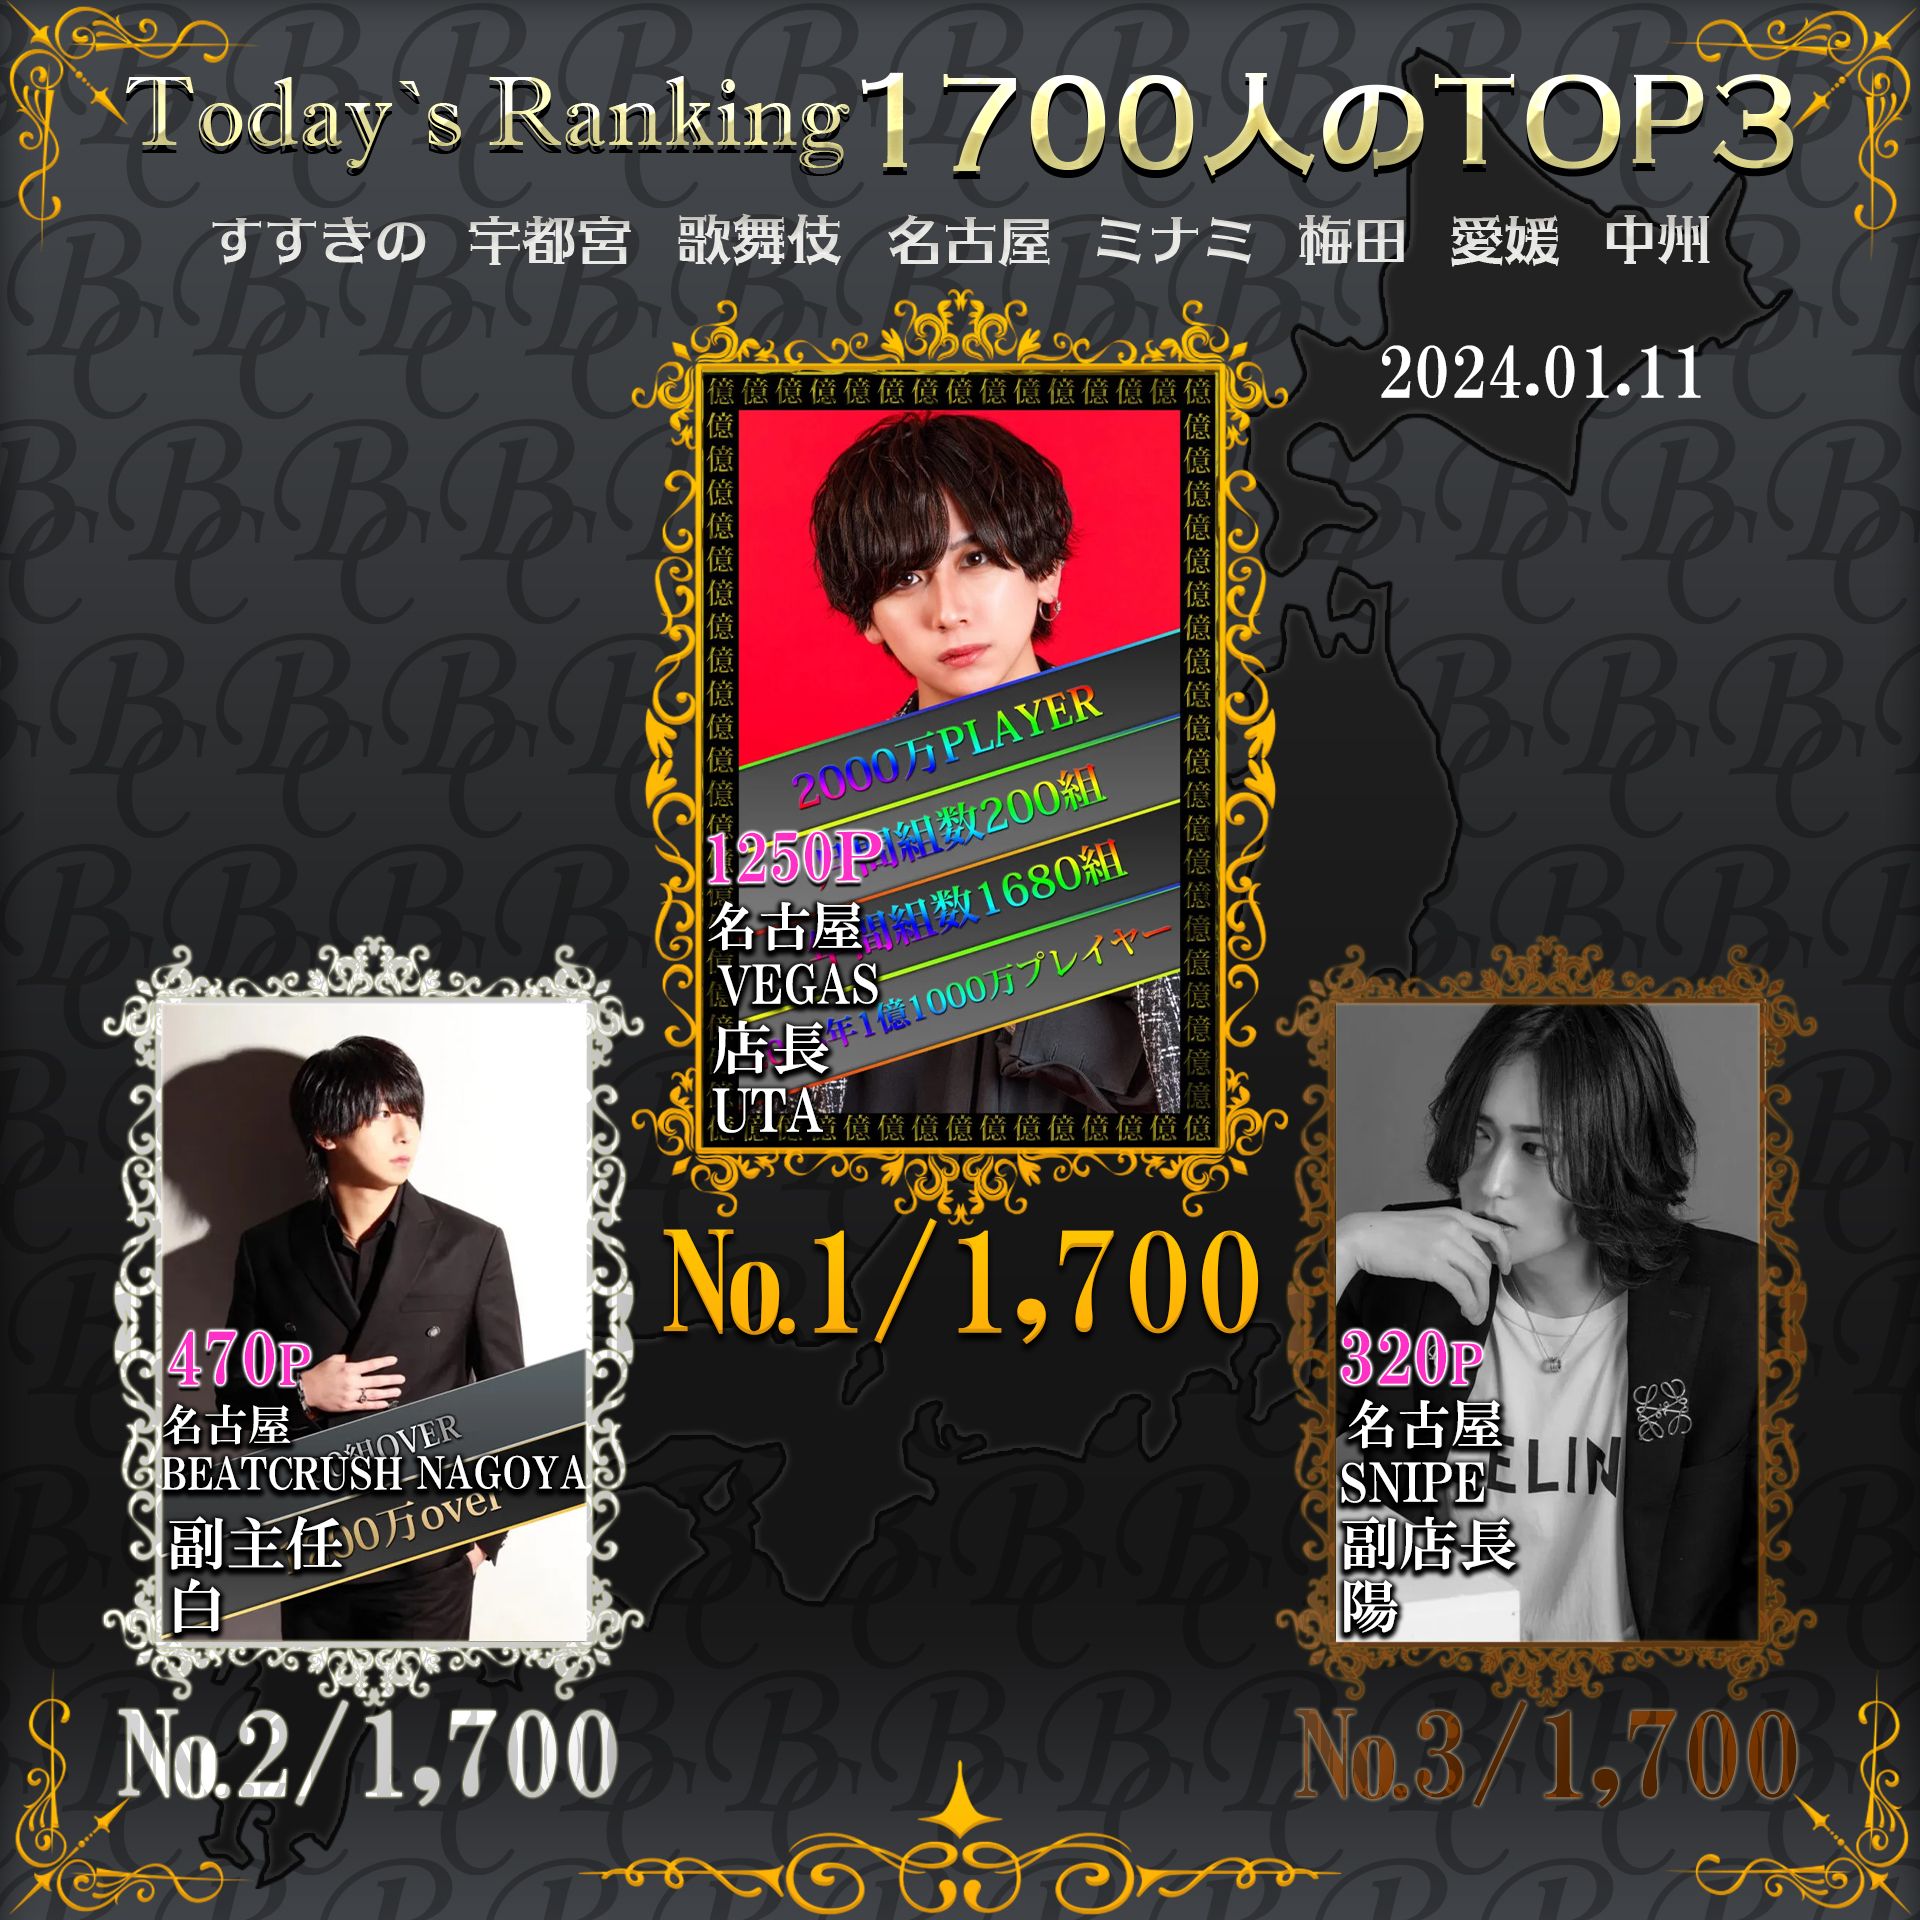 1/11  Today’s Ranking